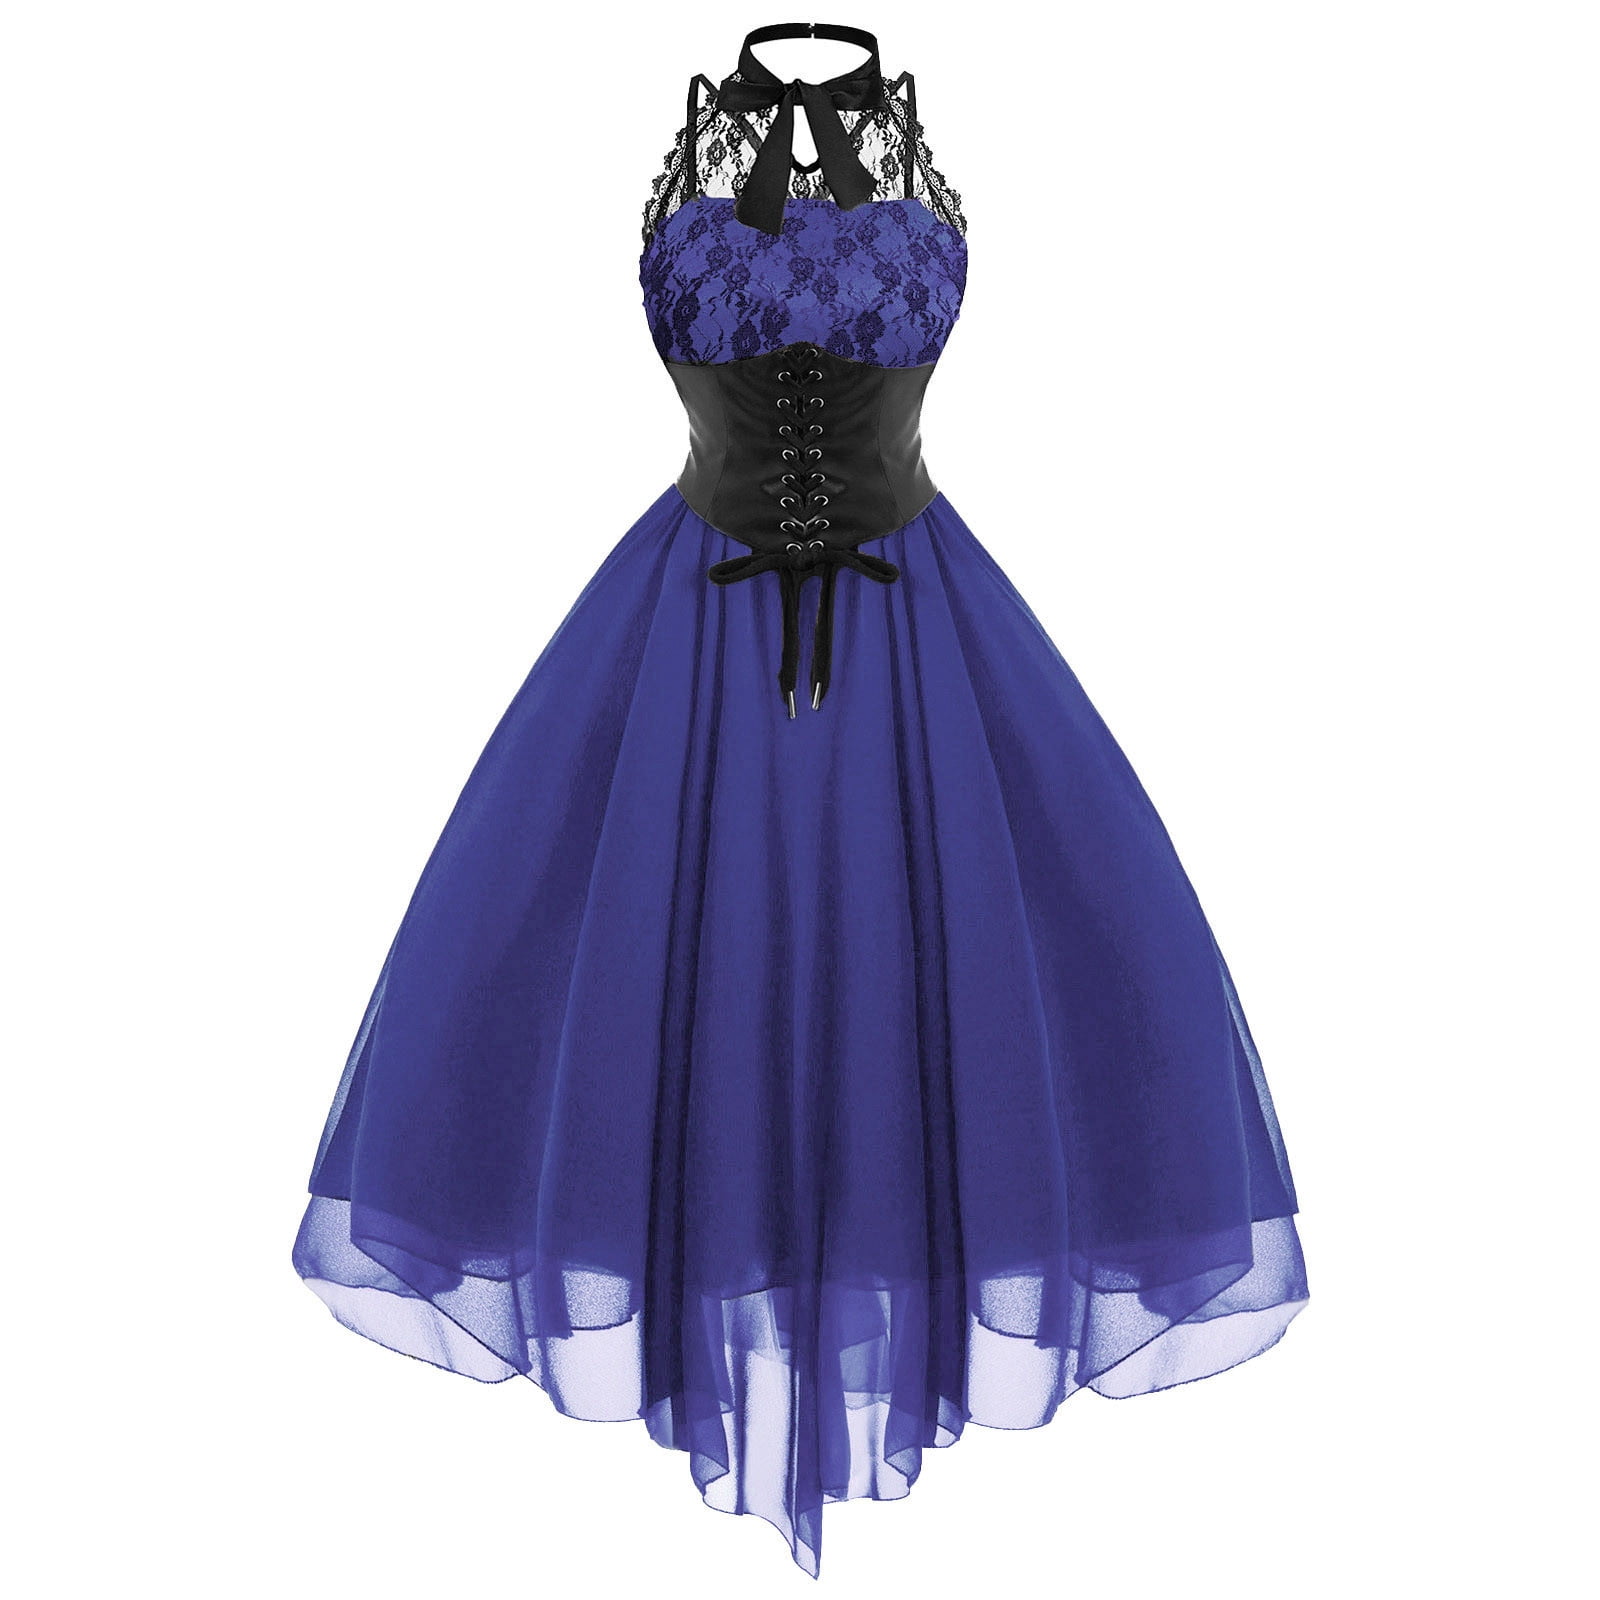 purple corset dress